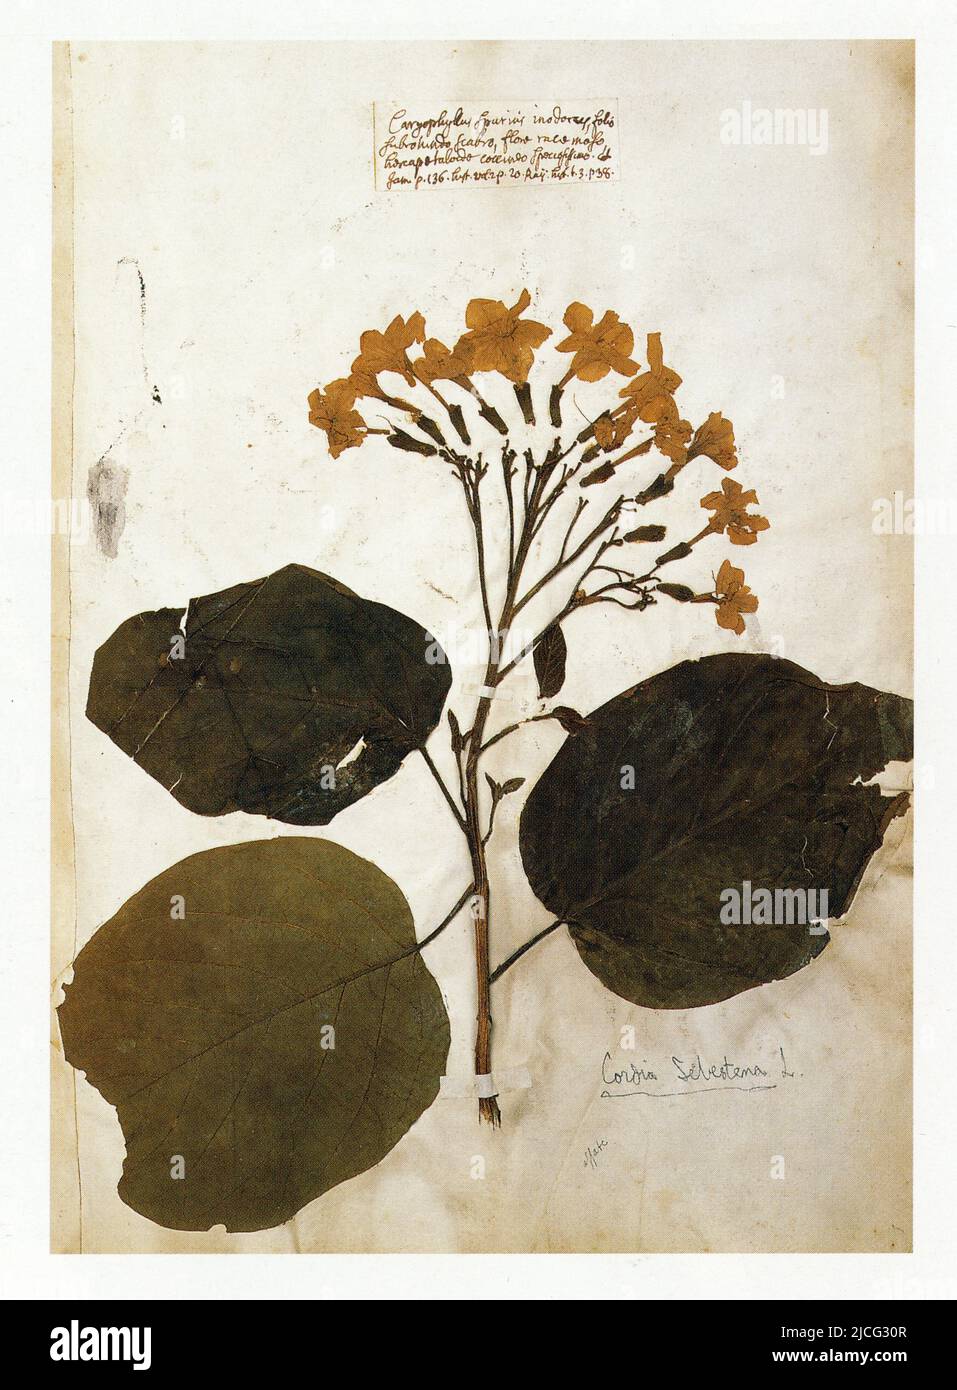 Caryophyllus spurius inodorus,folio subrotundo scabro flore racemoso exapetaloidescoccineo speciosissimo.Cordia sebestena.la cordia rouge Foto Stock